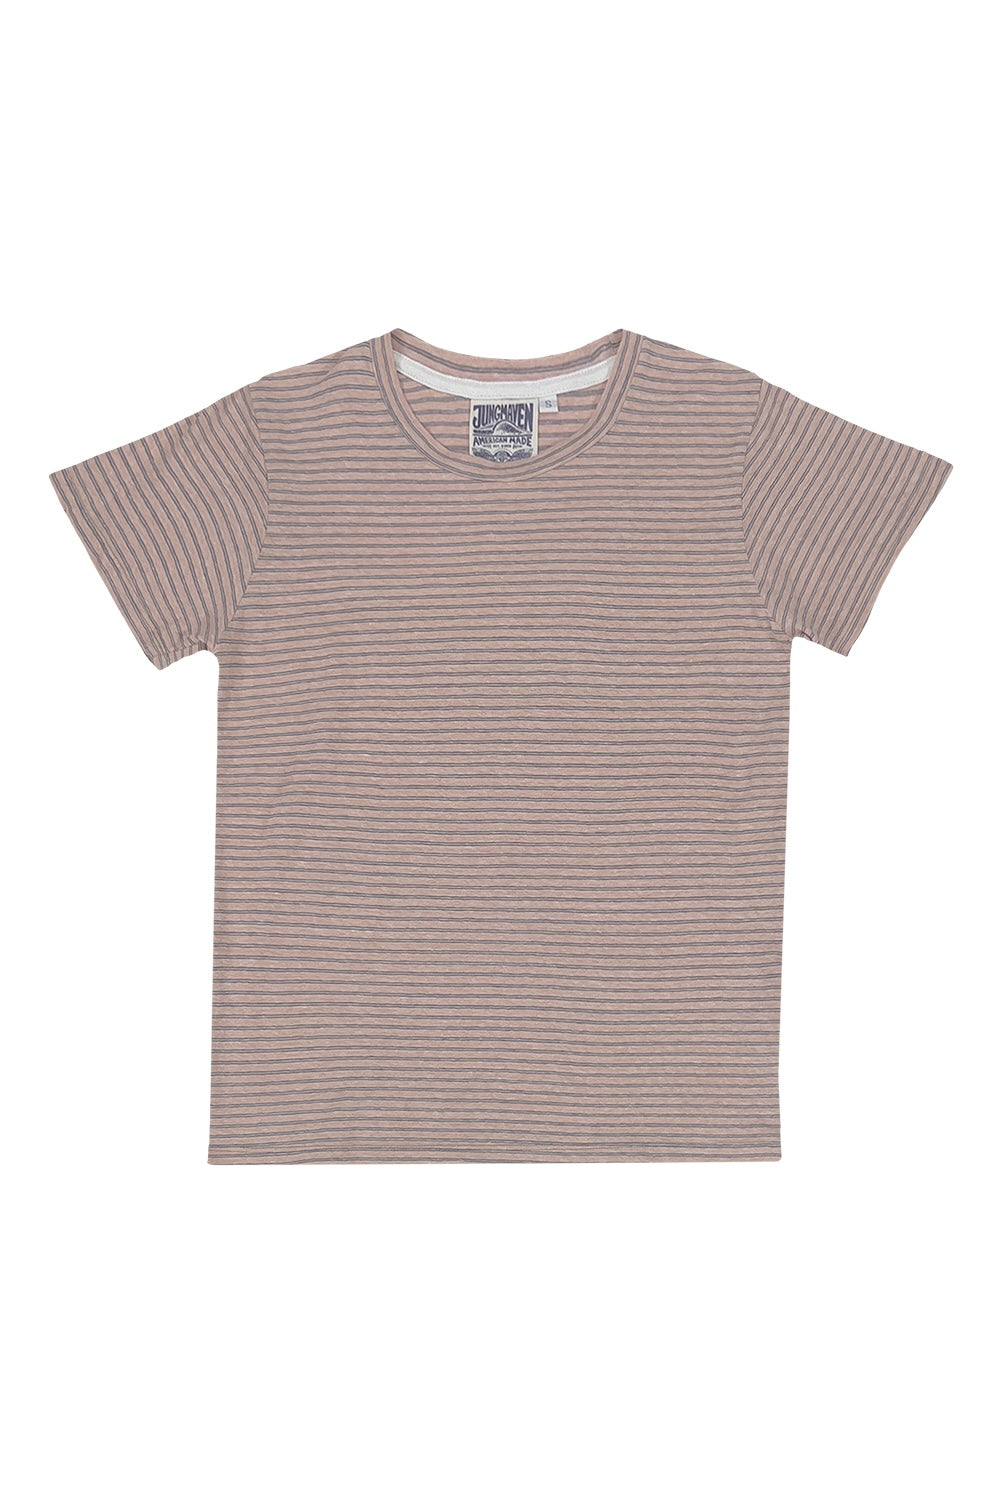 Stripe Lorel Tee | Jungmaven Hemp Clothing & Accessories / Color: Pink/Blue/Canvas Thin Stripe